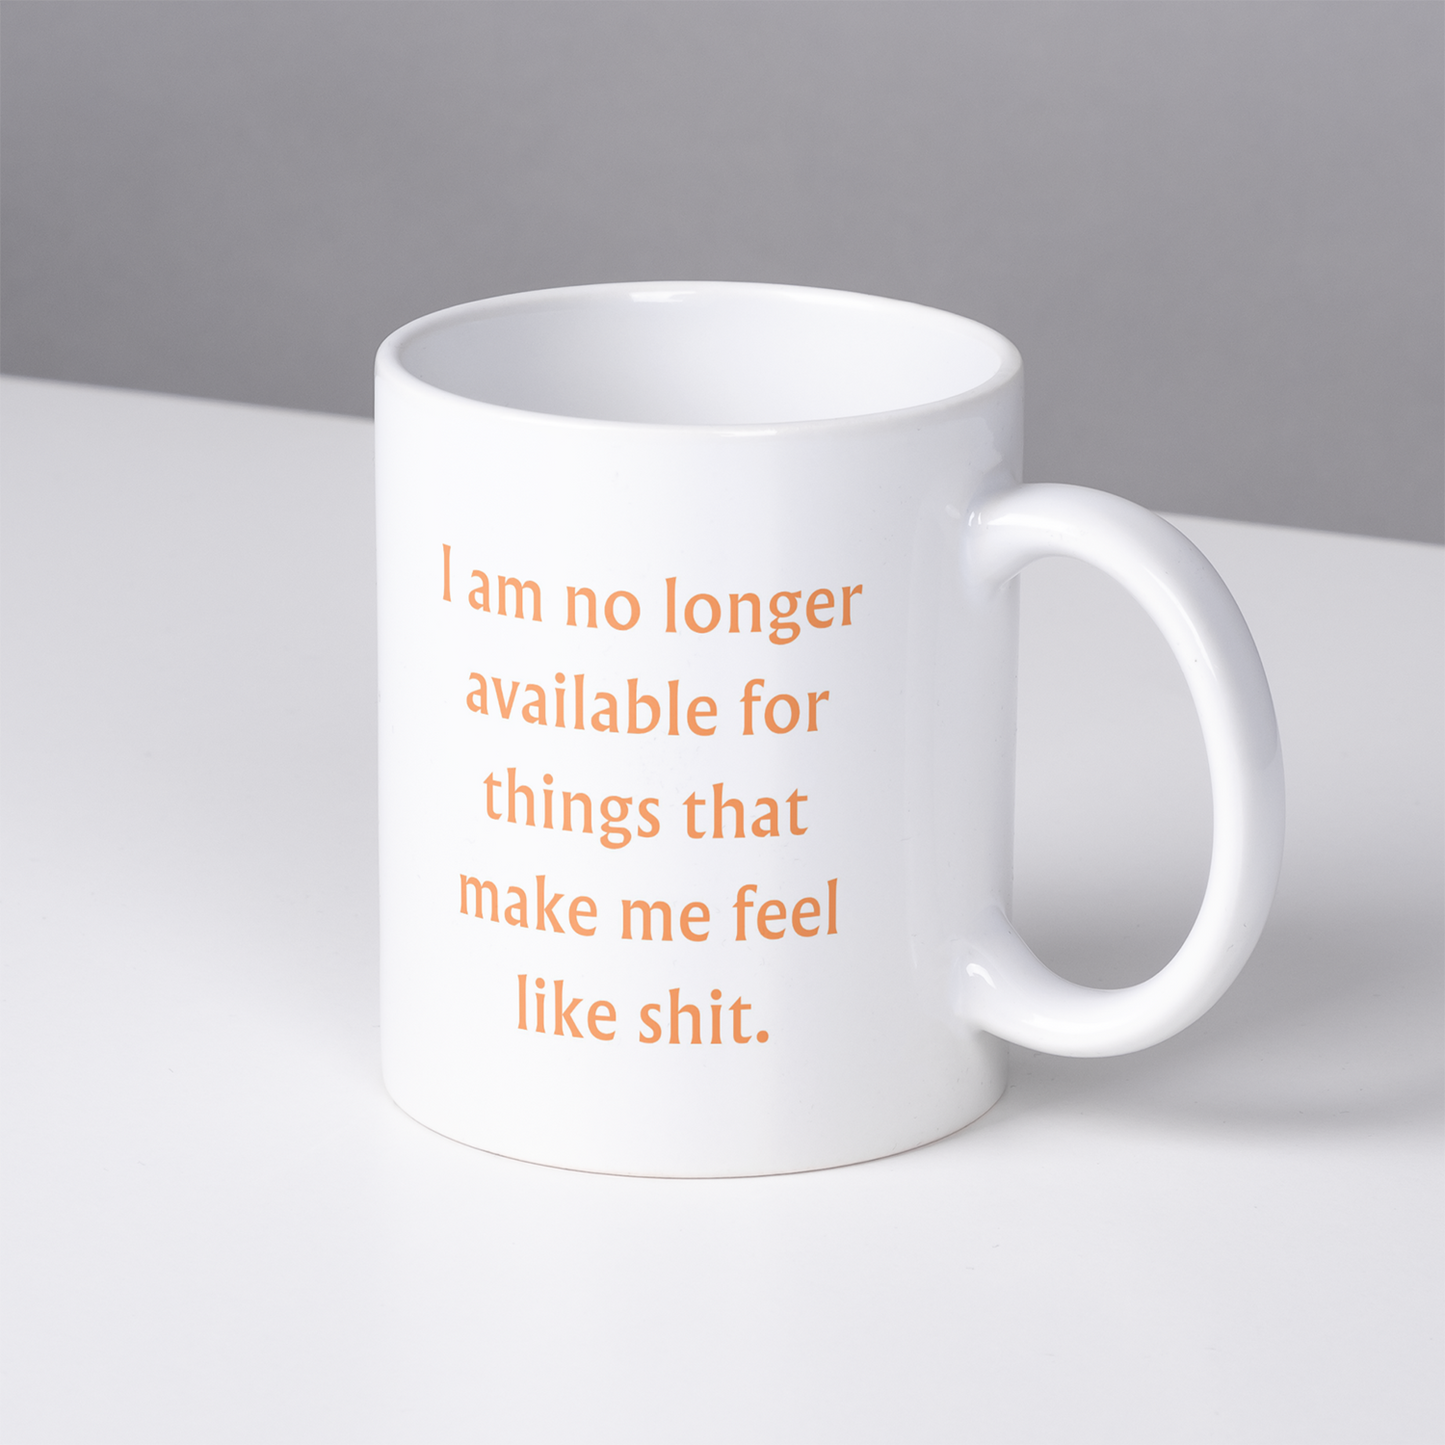 I am no longer available - Mug